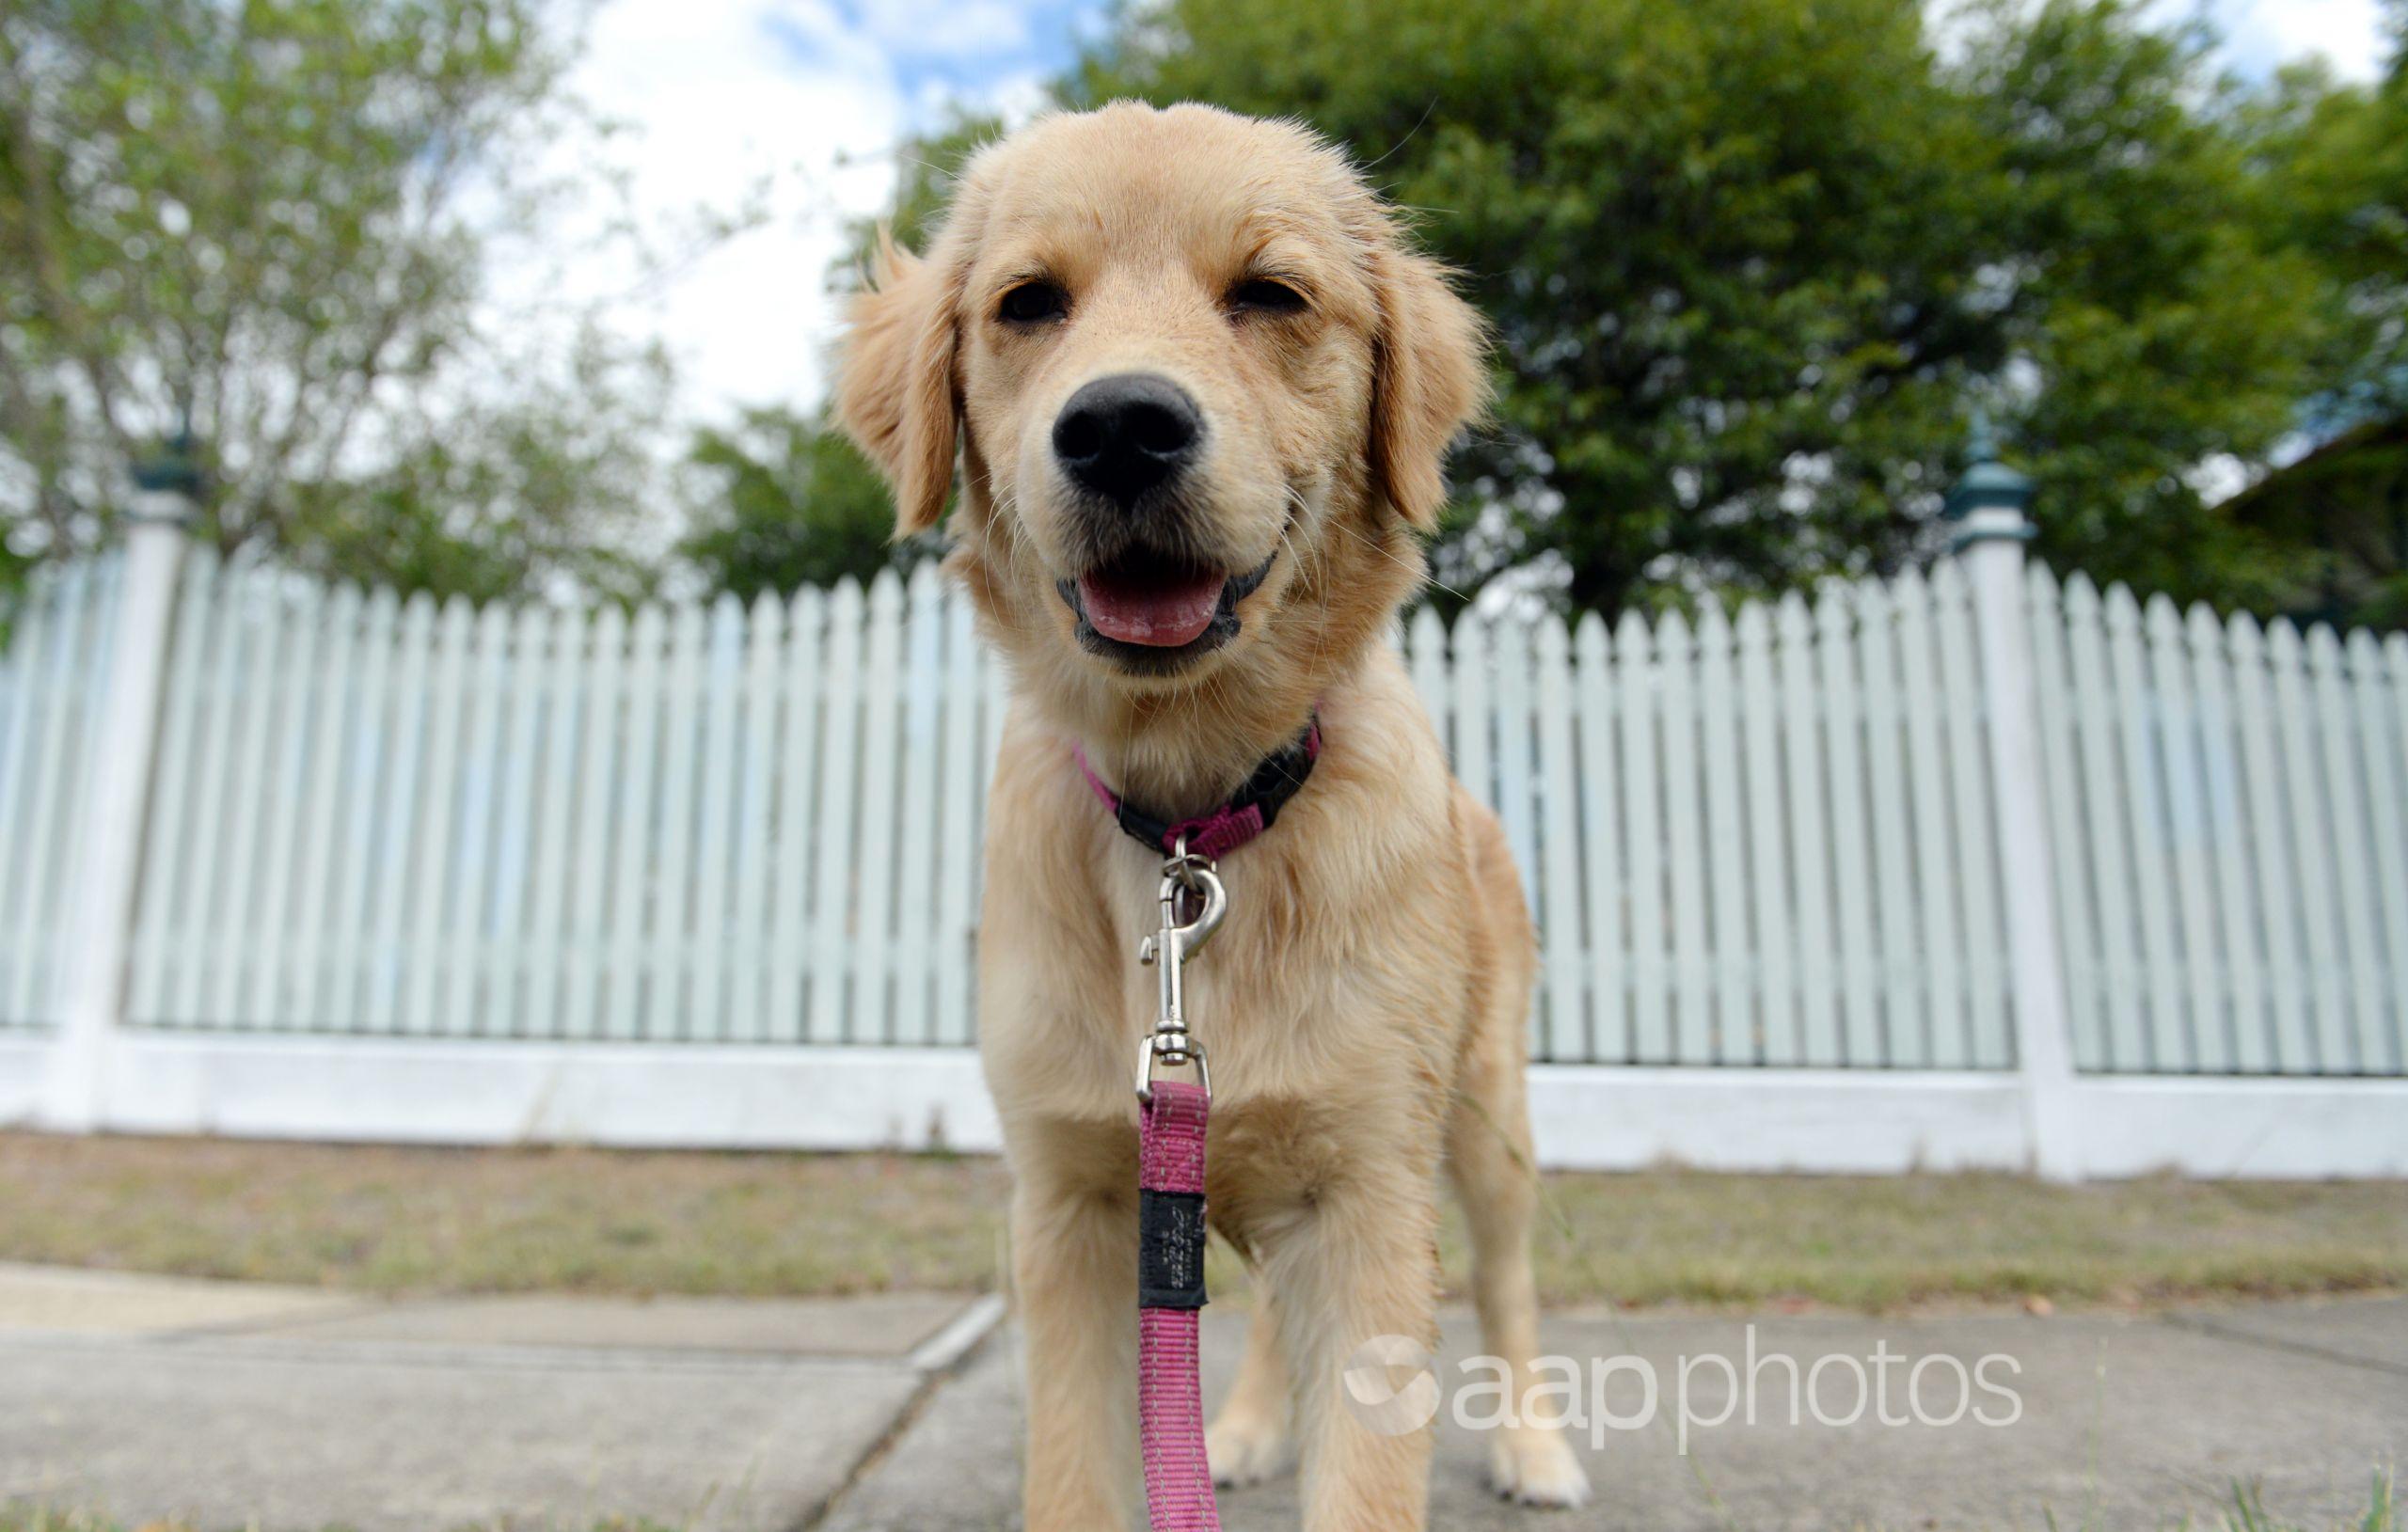 A golden retriever puppy dog on a leash.